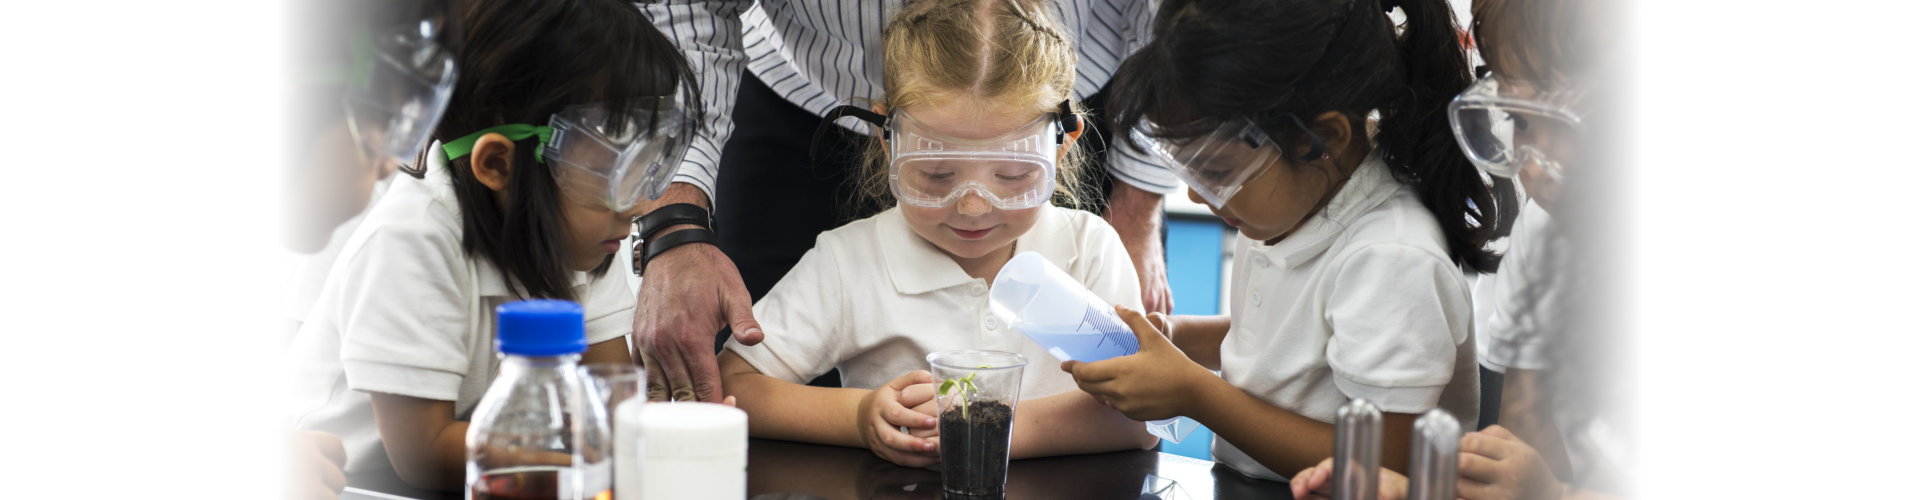 children doing science experiments